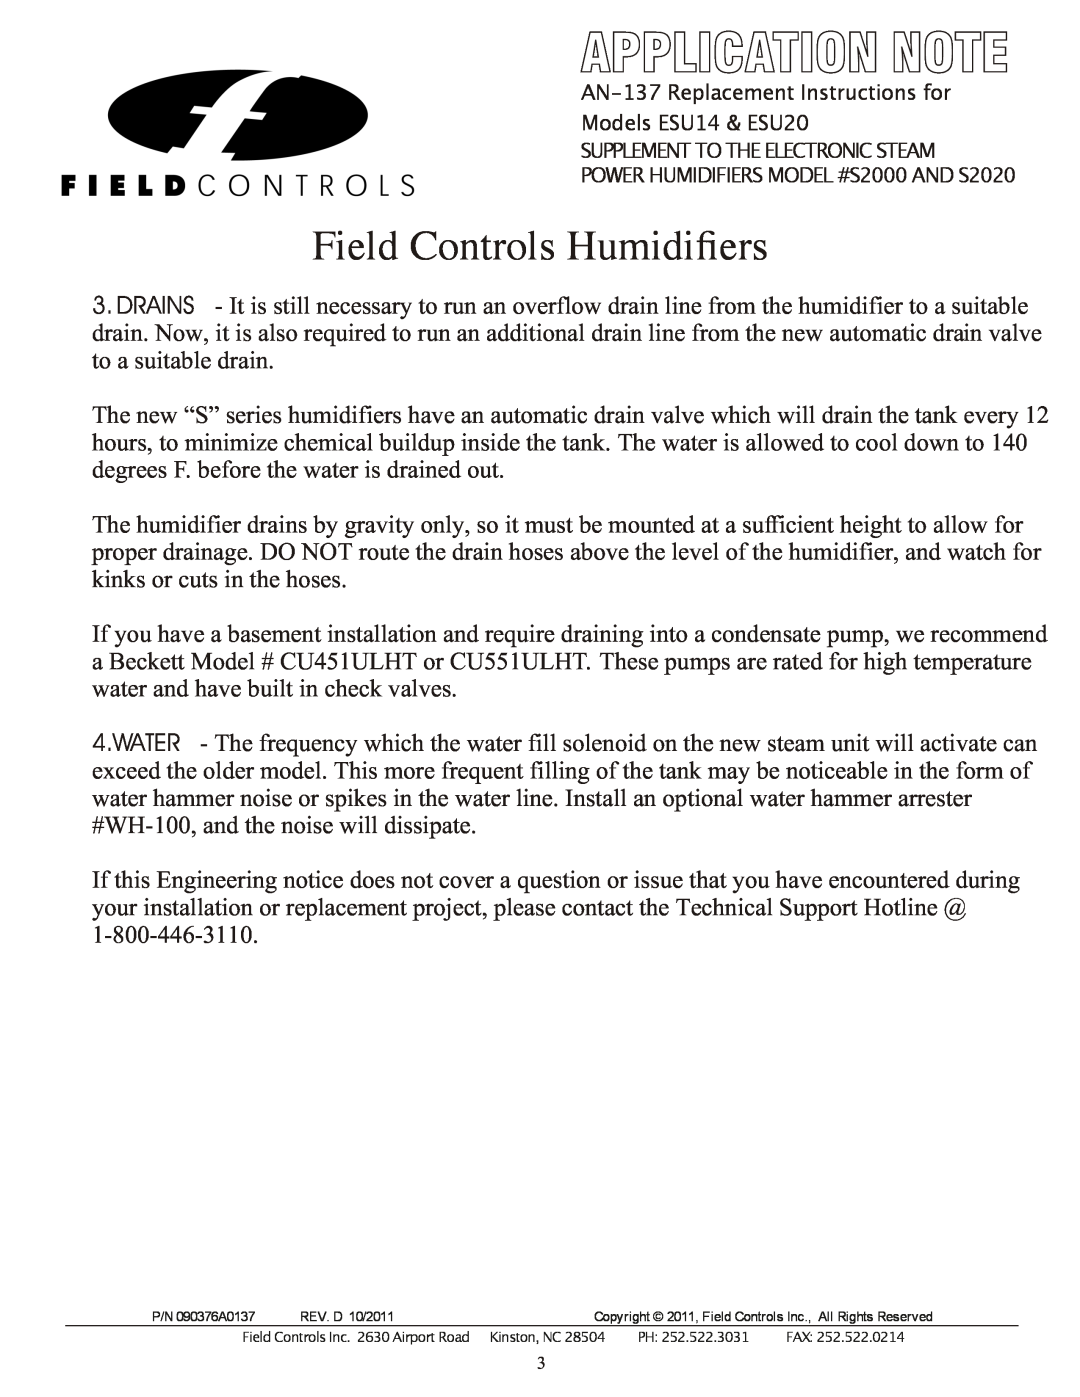 Field Controls ESU14 dimensions Field Controls Humidiﬁers 